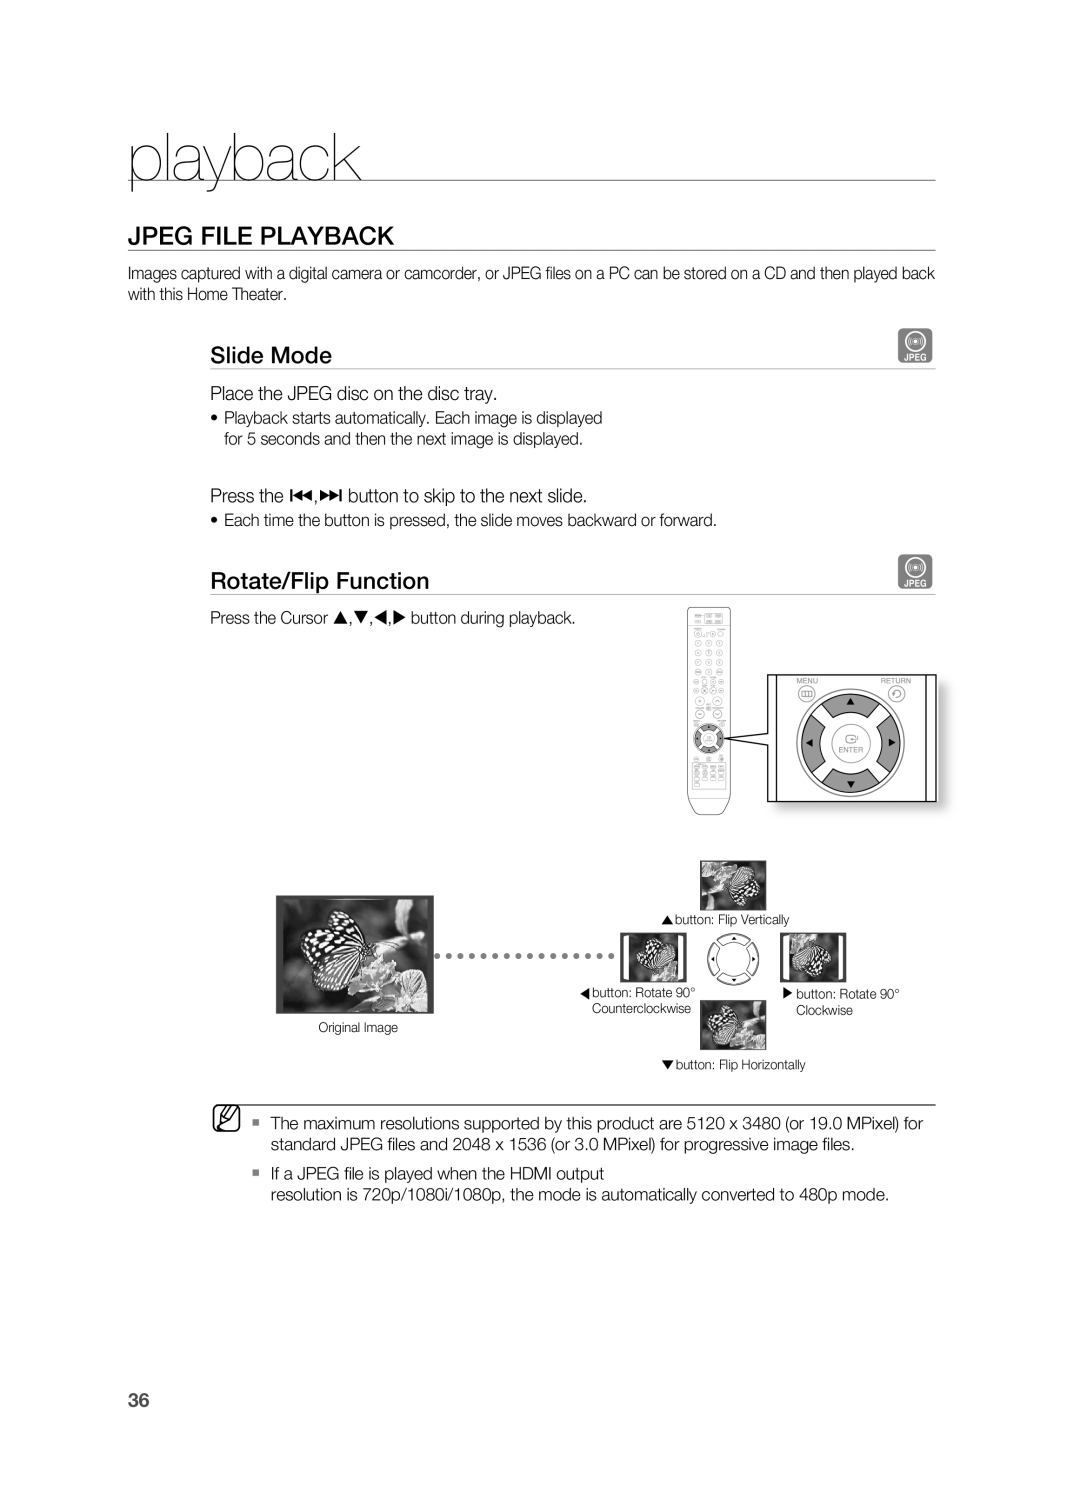 Samsung HT-TZ312, HT-Z310 manual JPEG fiLE PLayBaCK, Slide mode, rotate/flip function, playback 